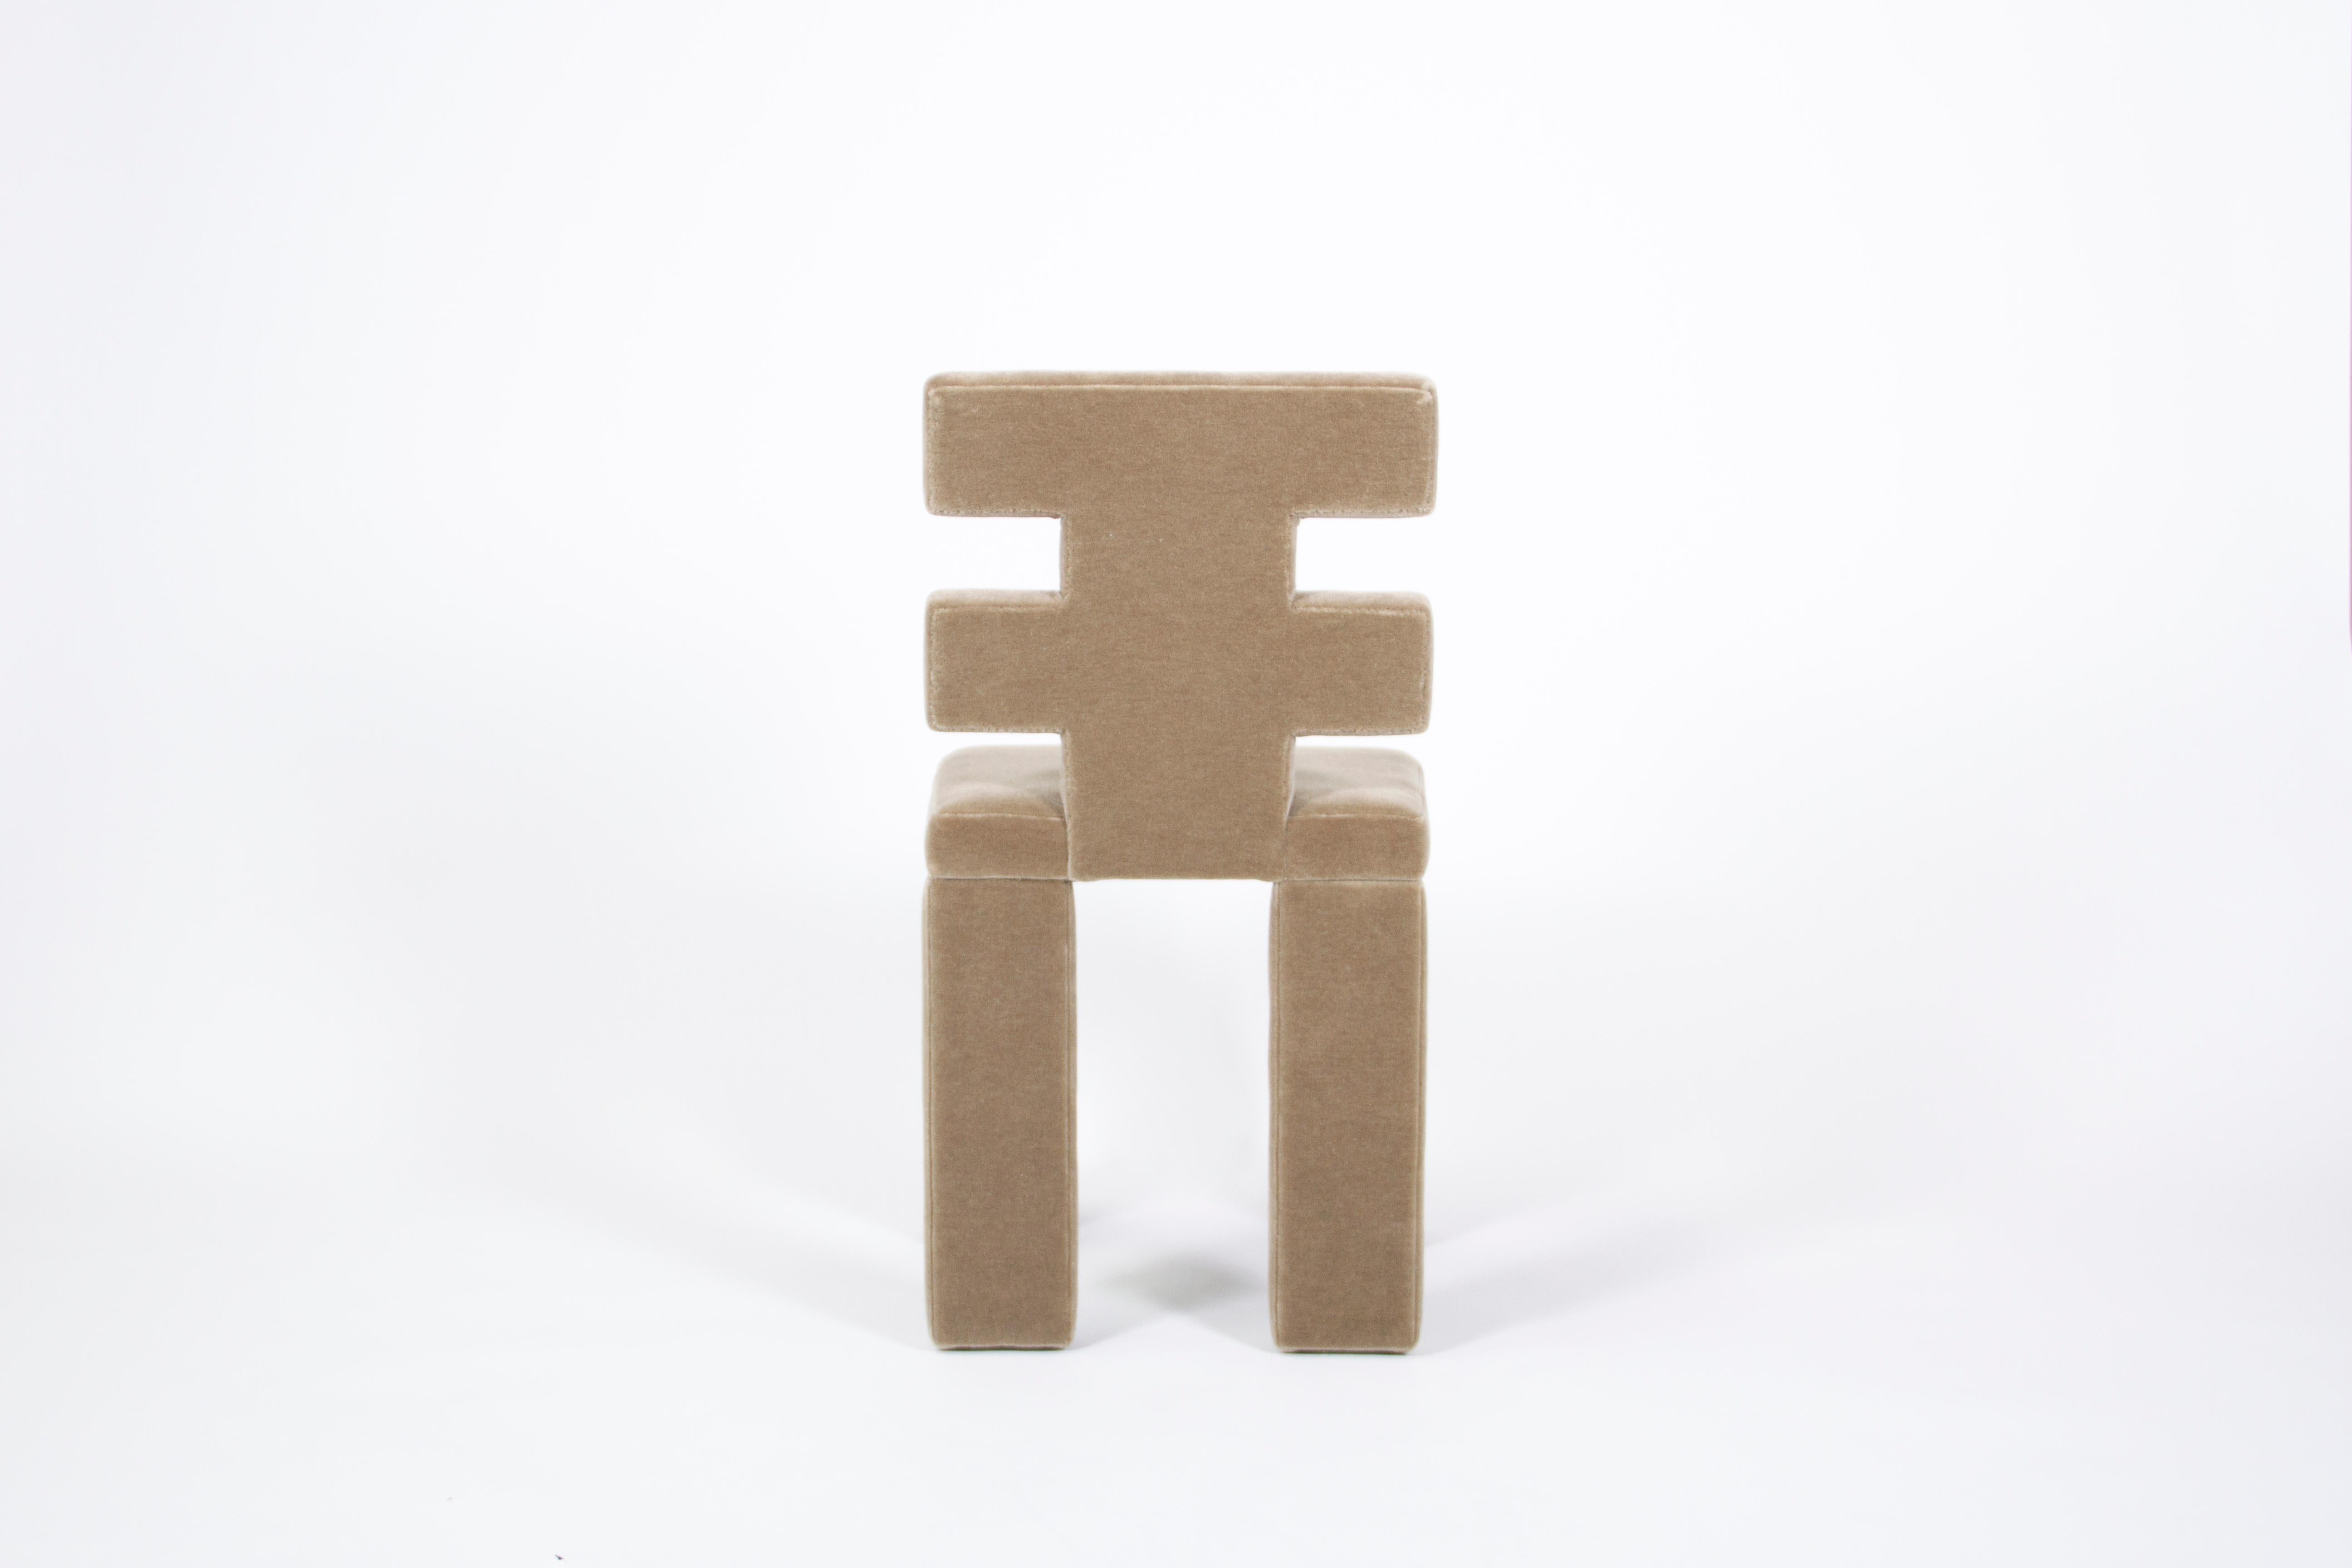 Modern H Chair by Estudio Persona